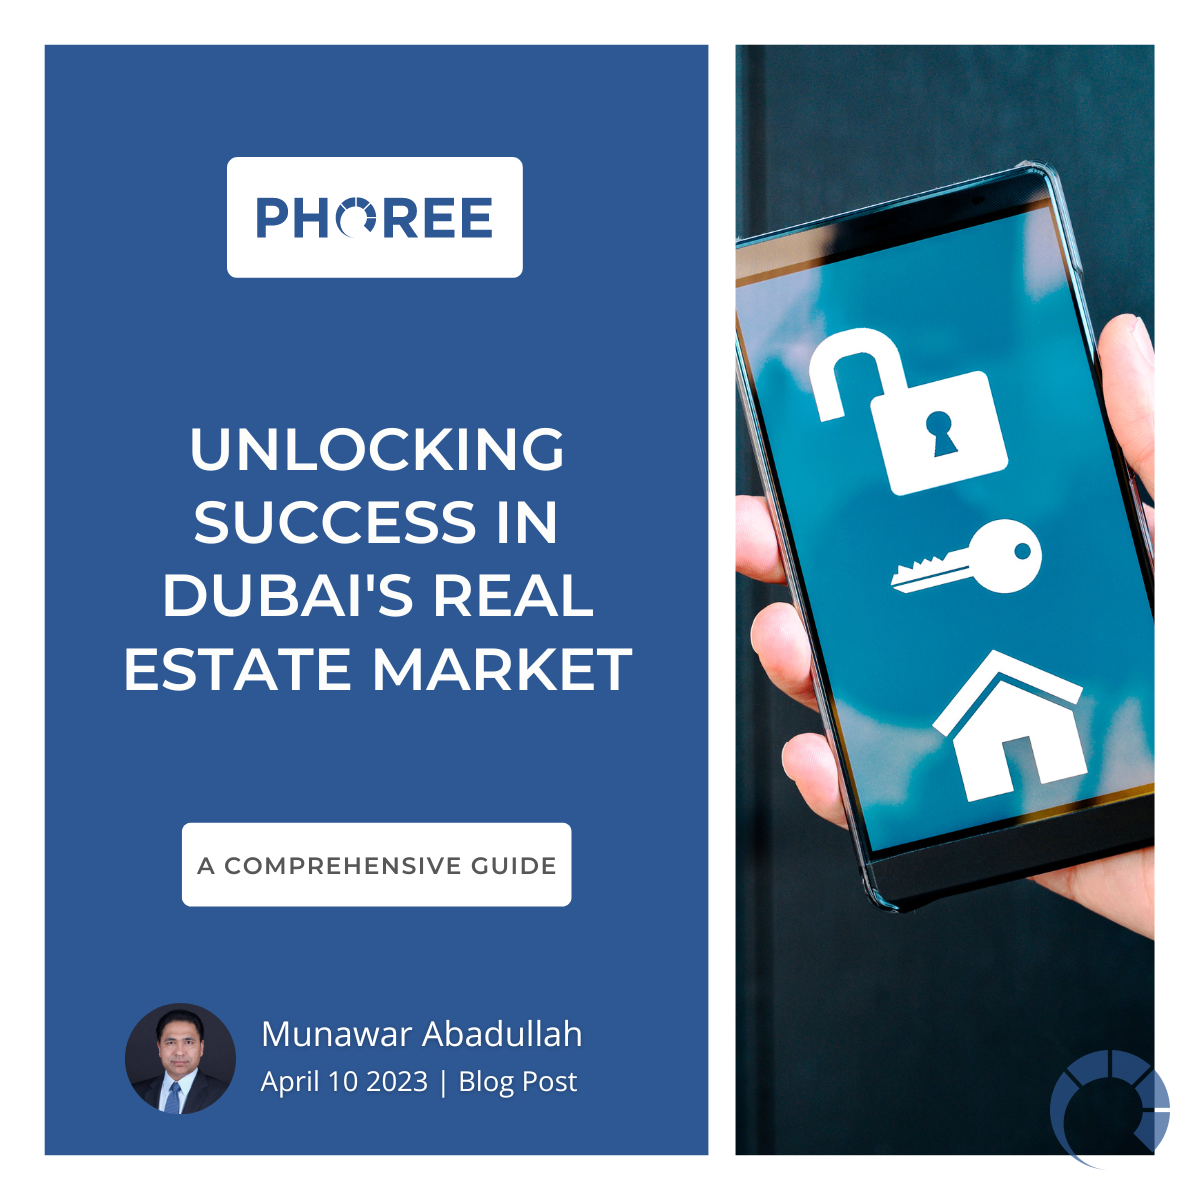 unlocking-success-in-dubais-real-estate-market.png